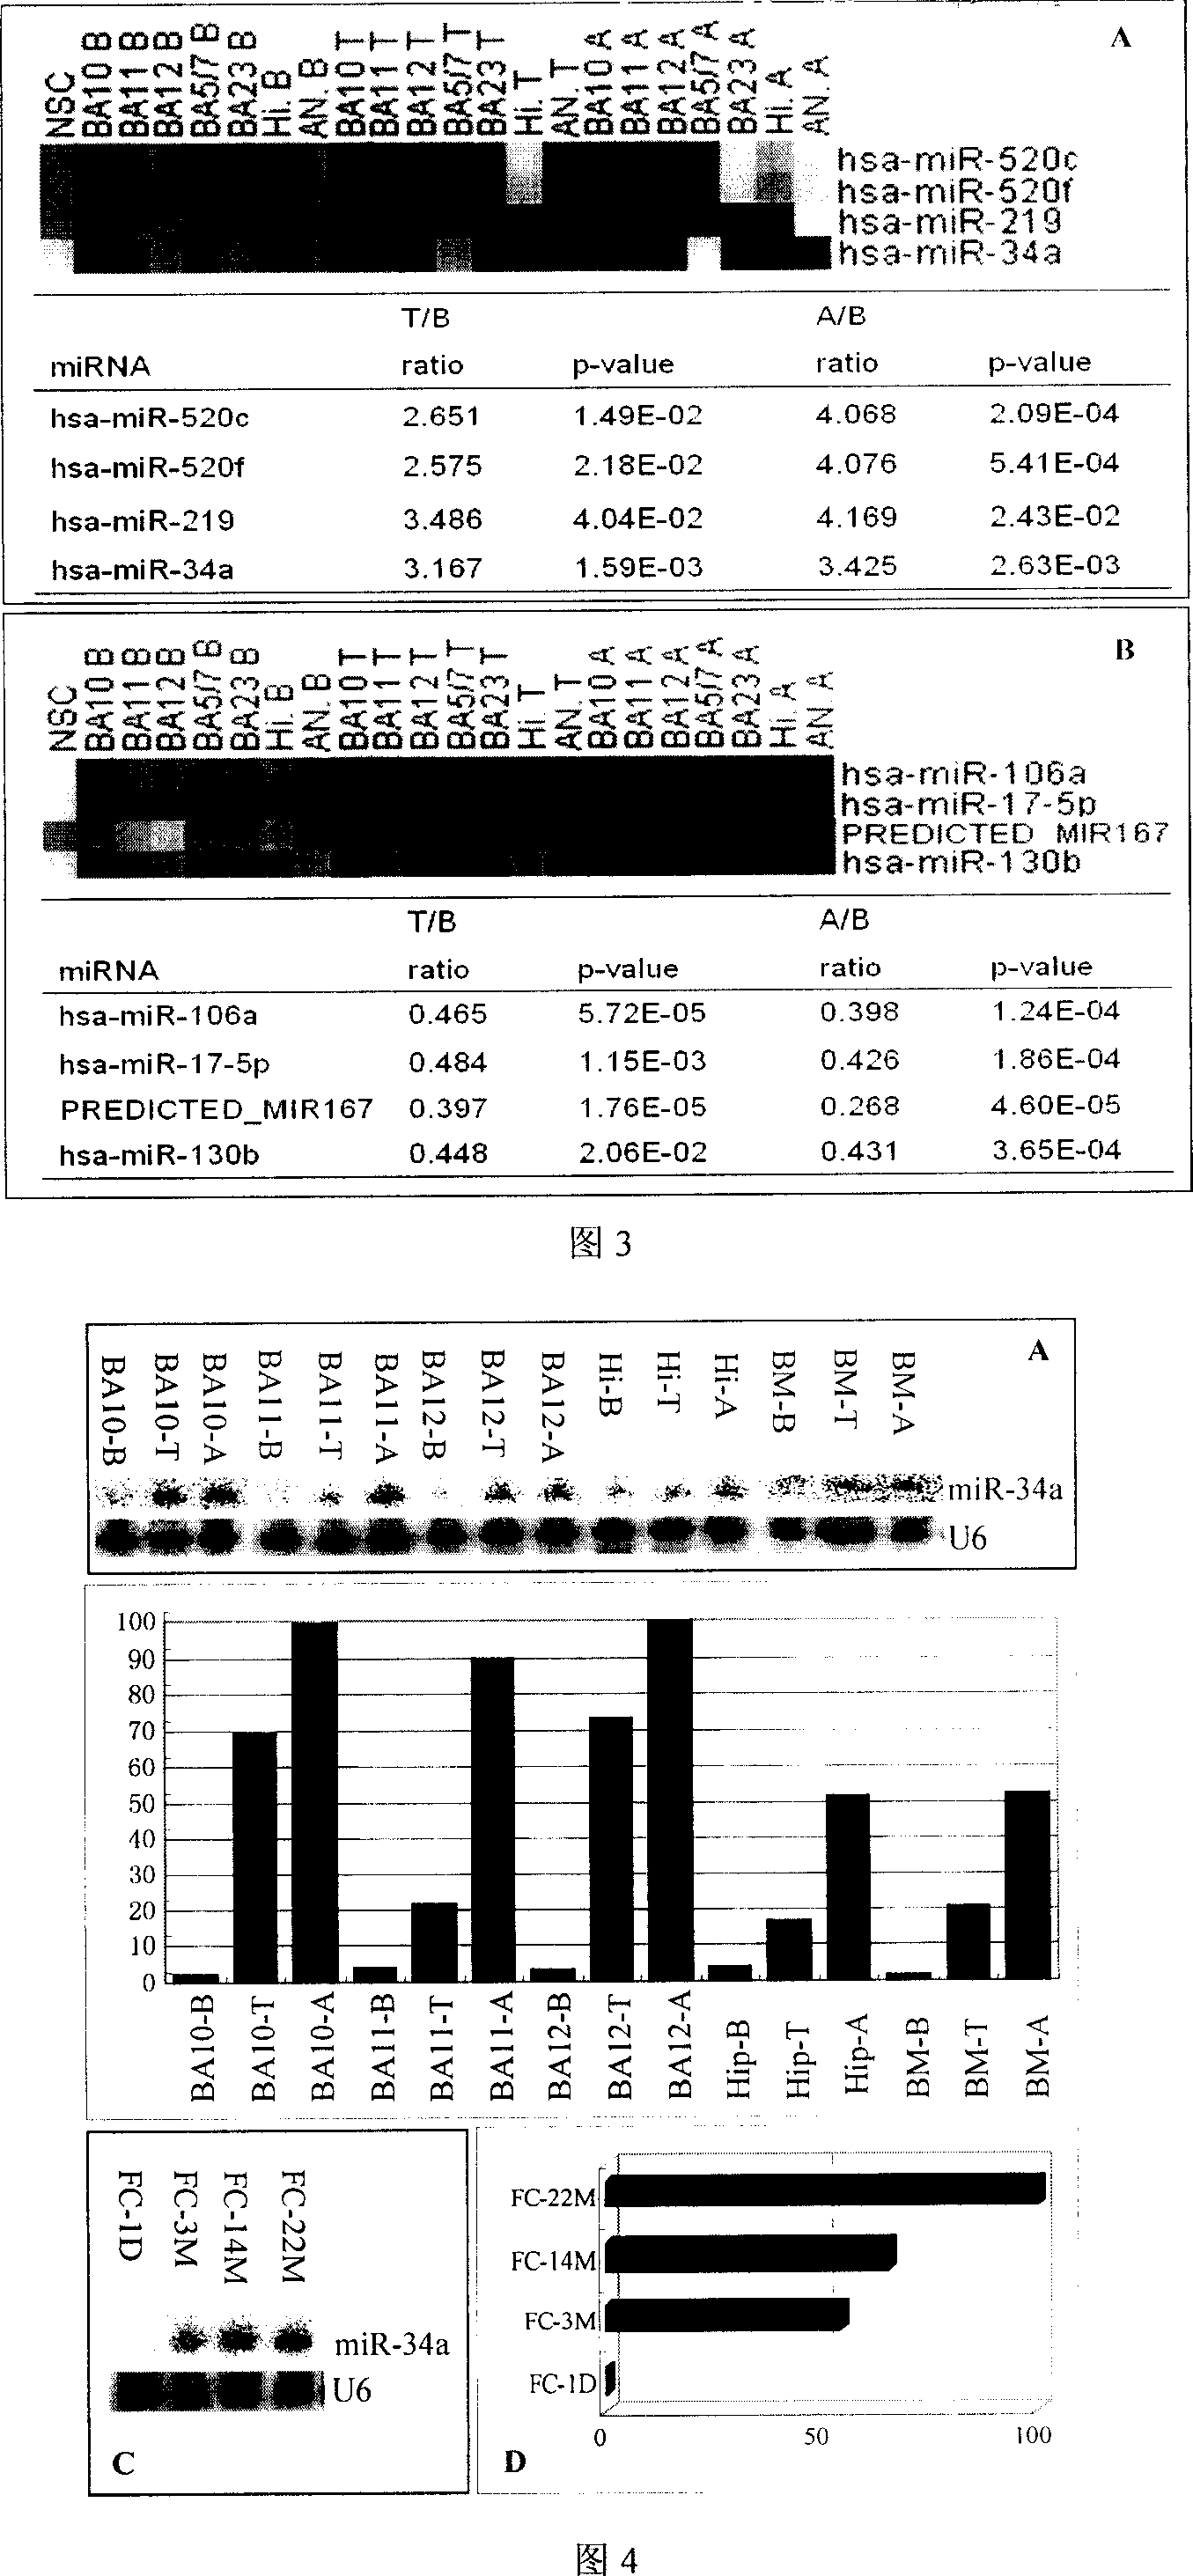 Use of miRNA-34a